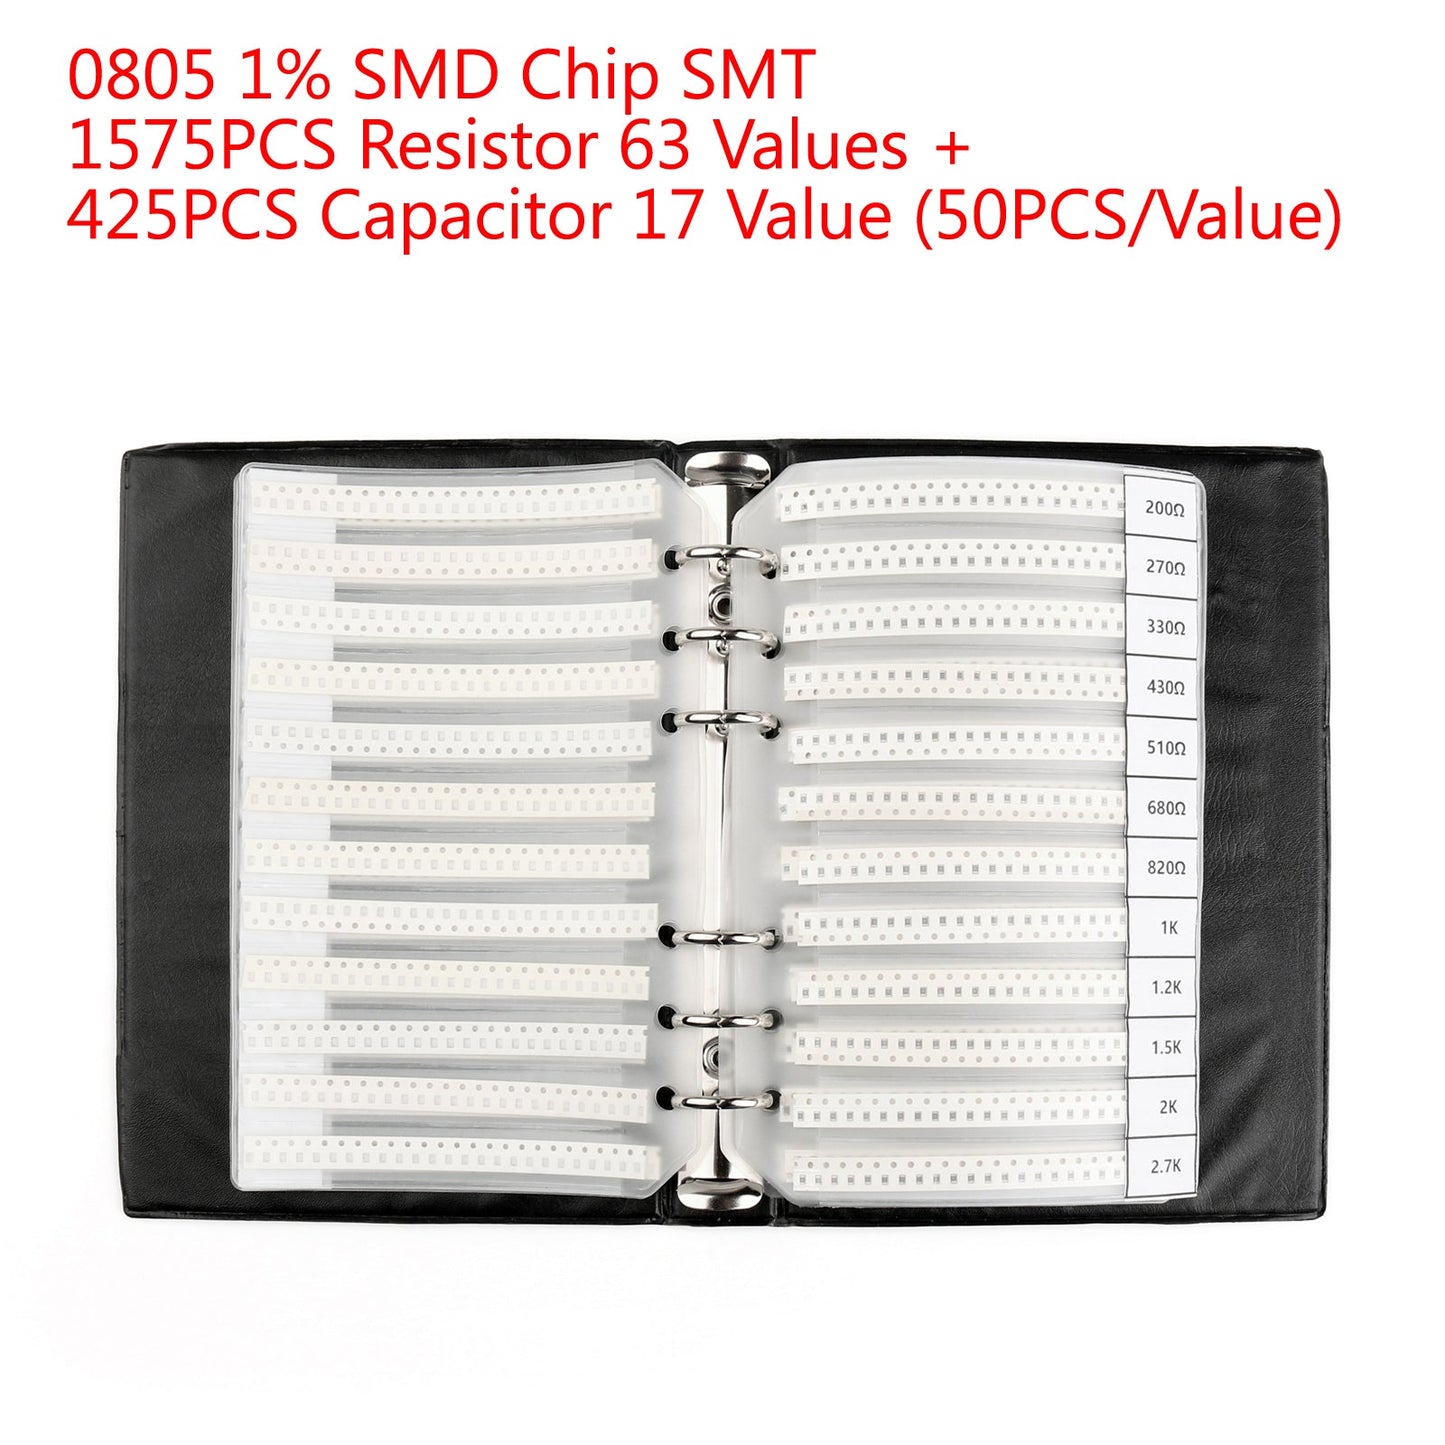 2000PCS 0805 1% SMD Chip SMT Resistor 63 Values + Capacitor 17 Value Sample Book